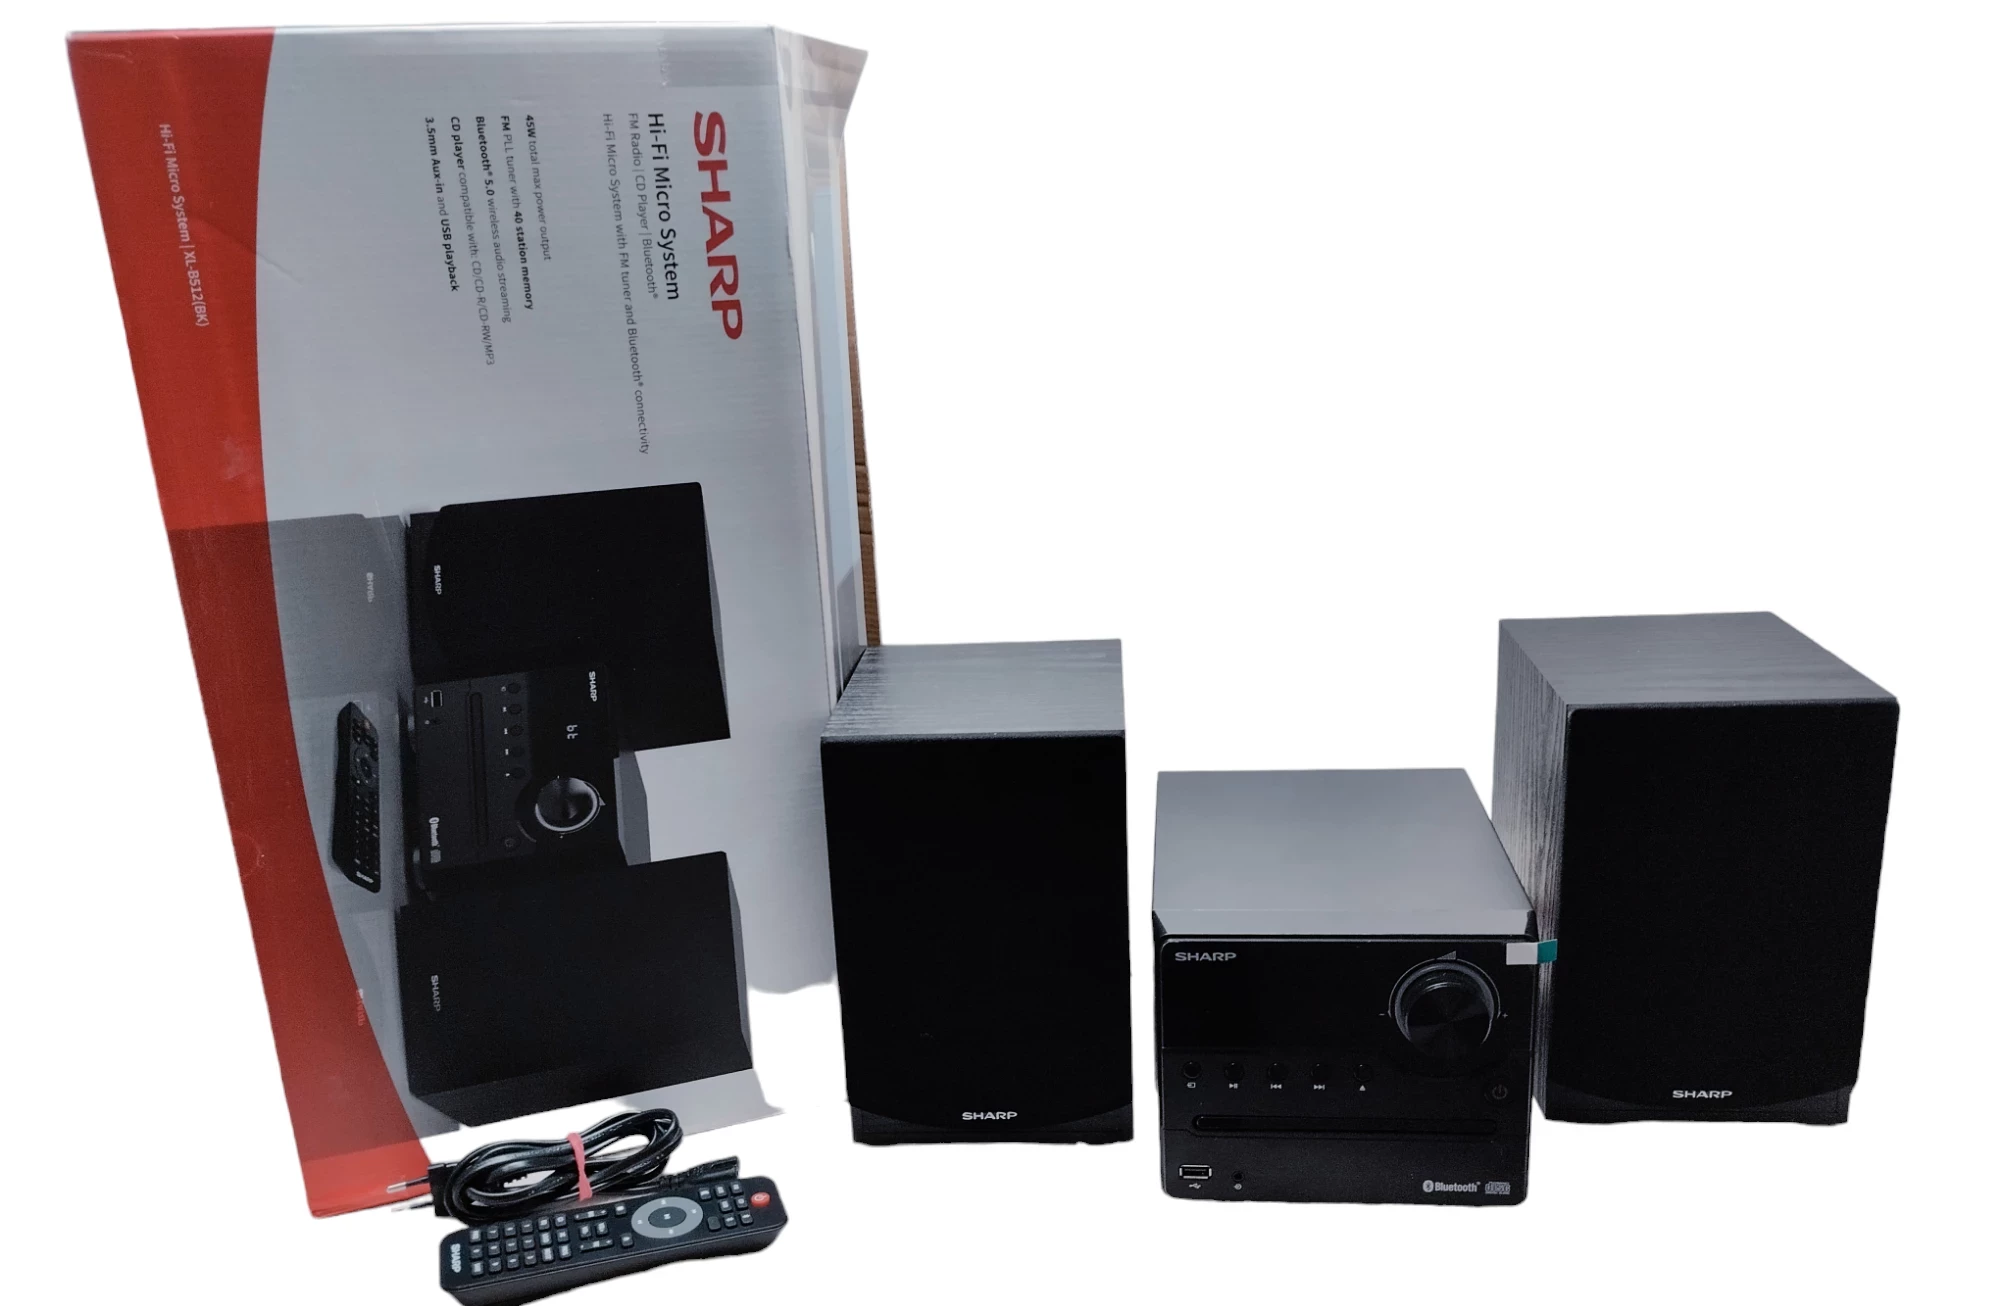 WIEŻA SHARP KOMPLET stereo XL-B512(BK) | Wieże BT/USB/CD/FM/AUX